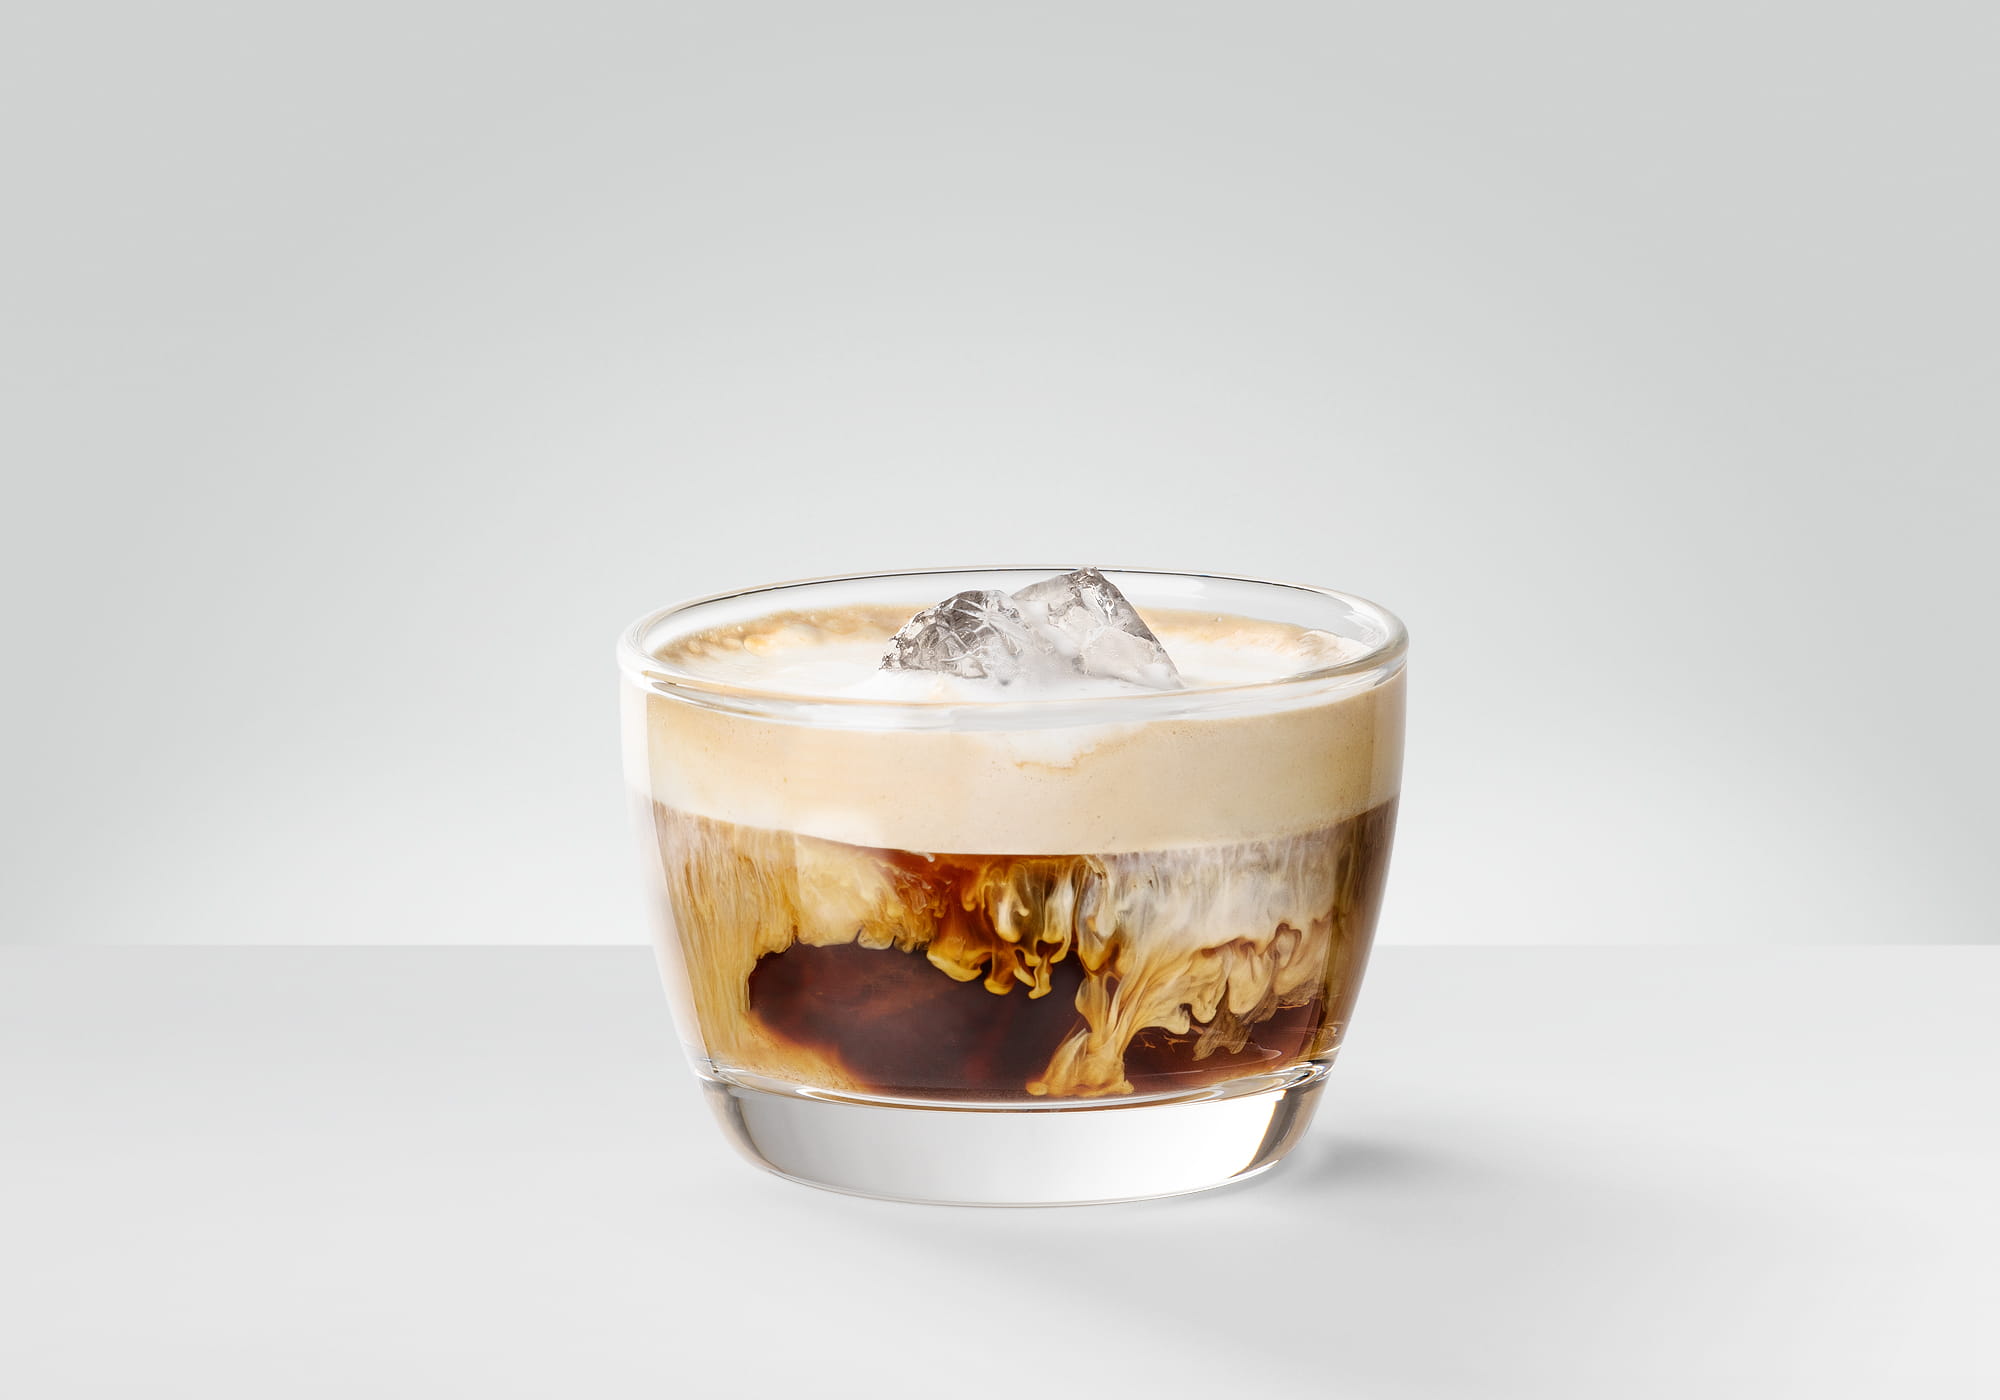 Iced Coffee Recipe: Iced Latte Macchiato